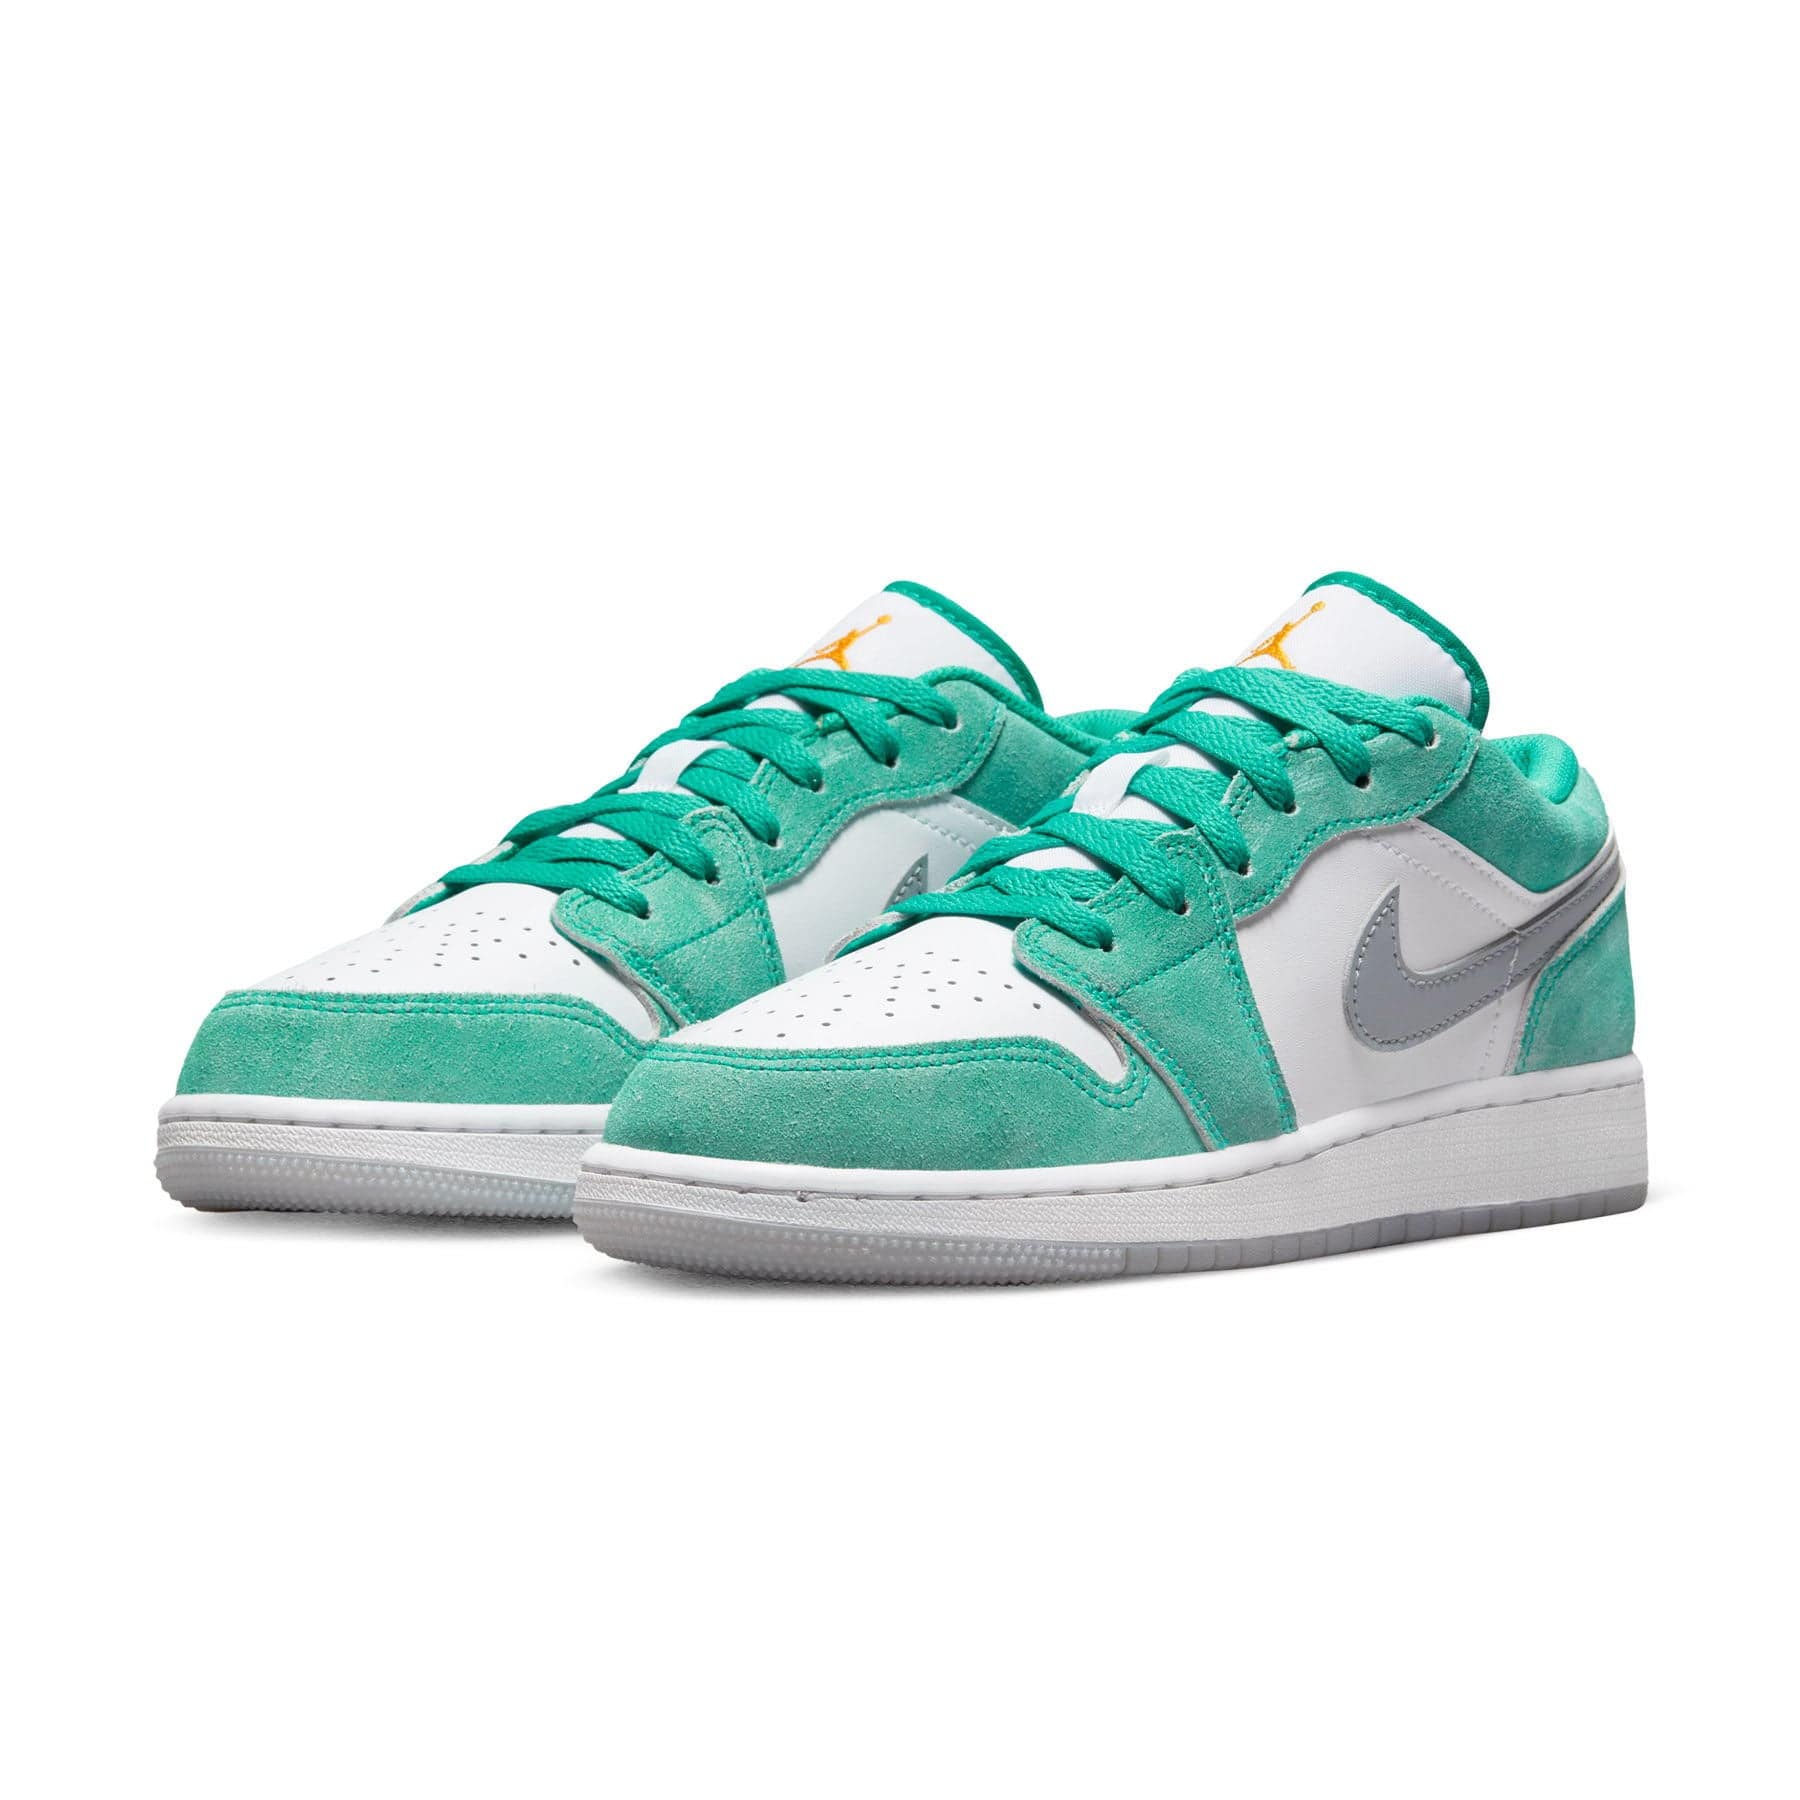 Nike GS Air Jordan Low "New Emerald"